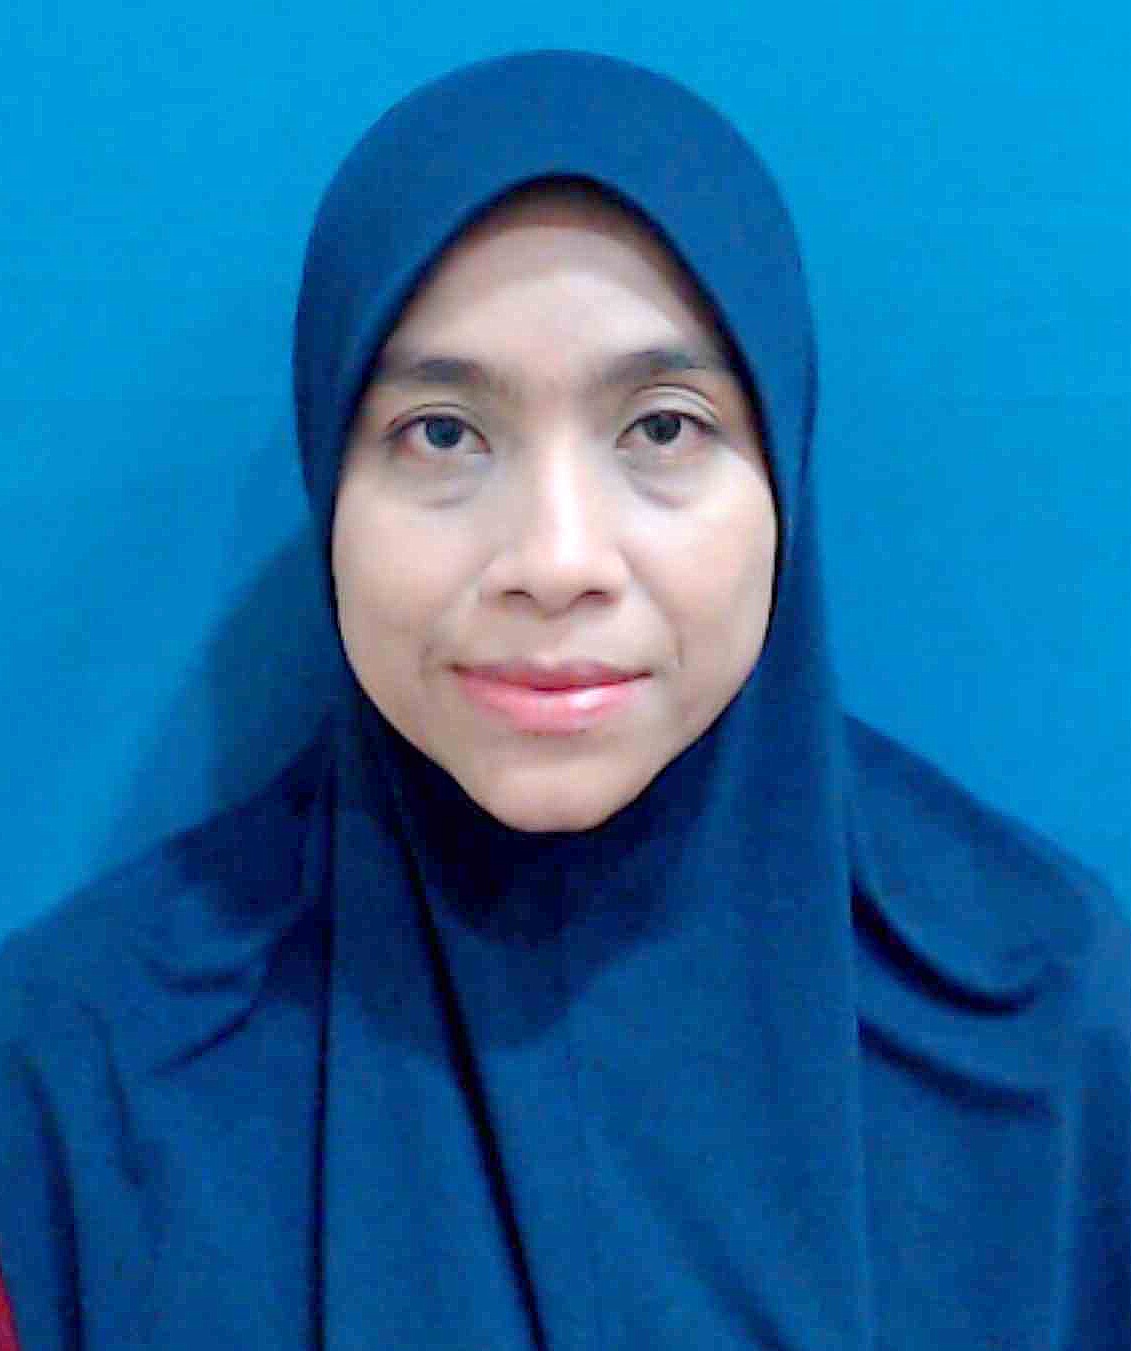 Nur Hashimah Binti Mohd Noriden @ Nuri